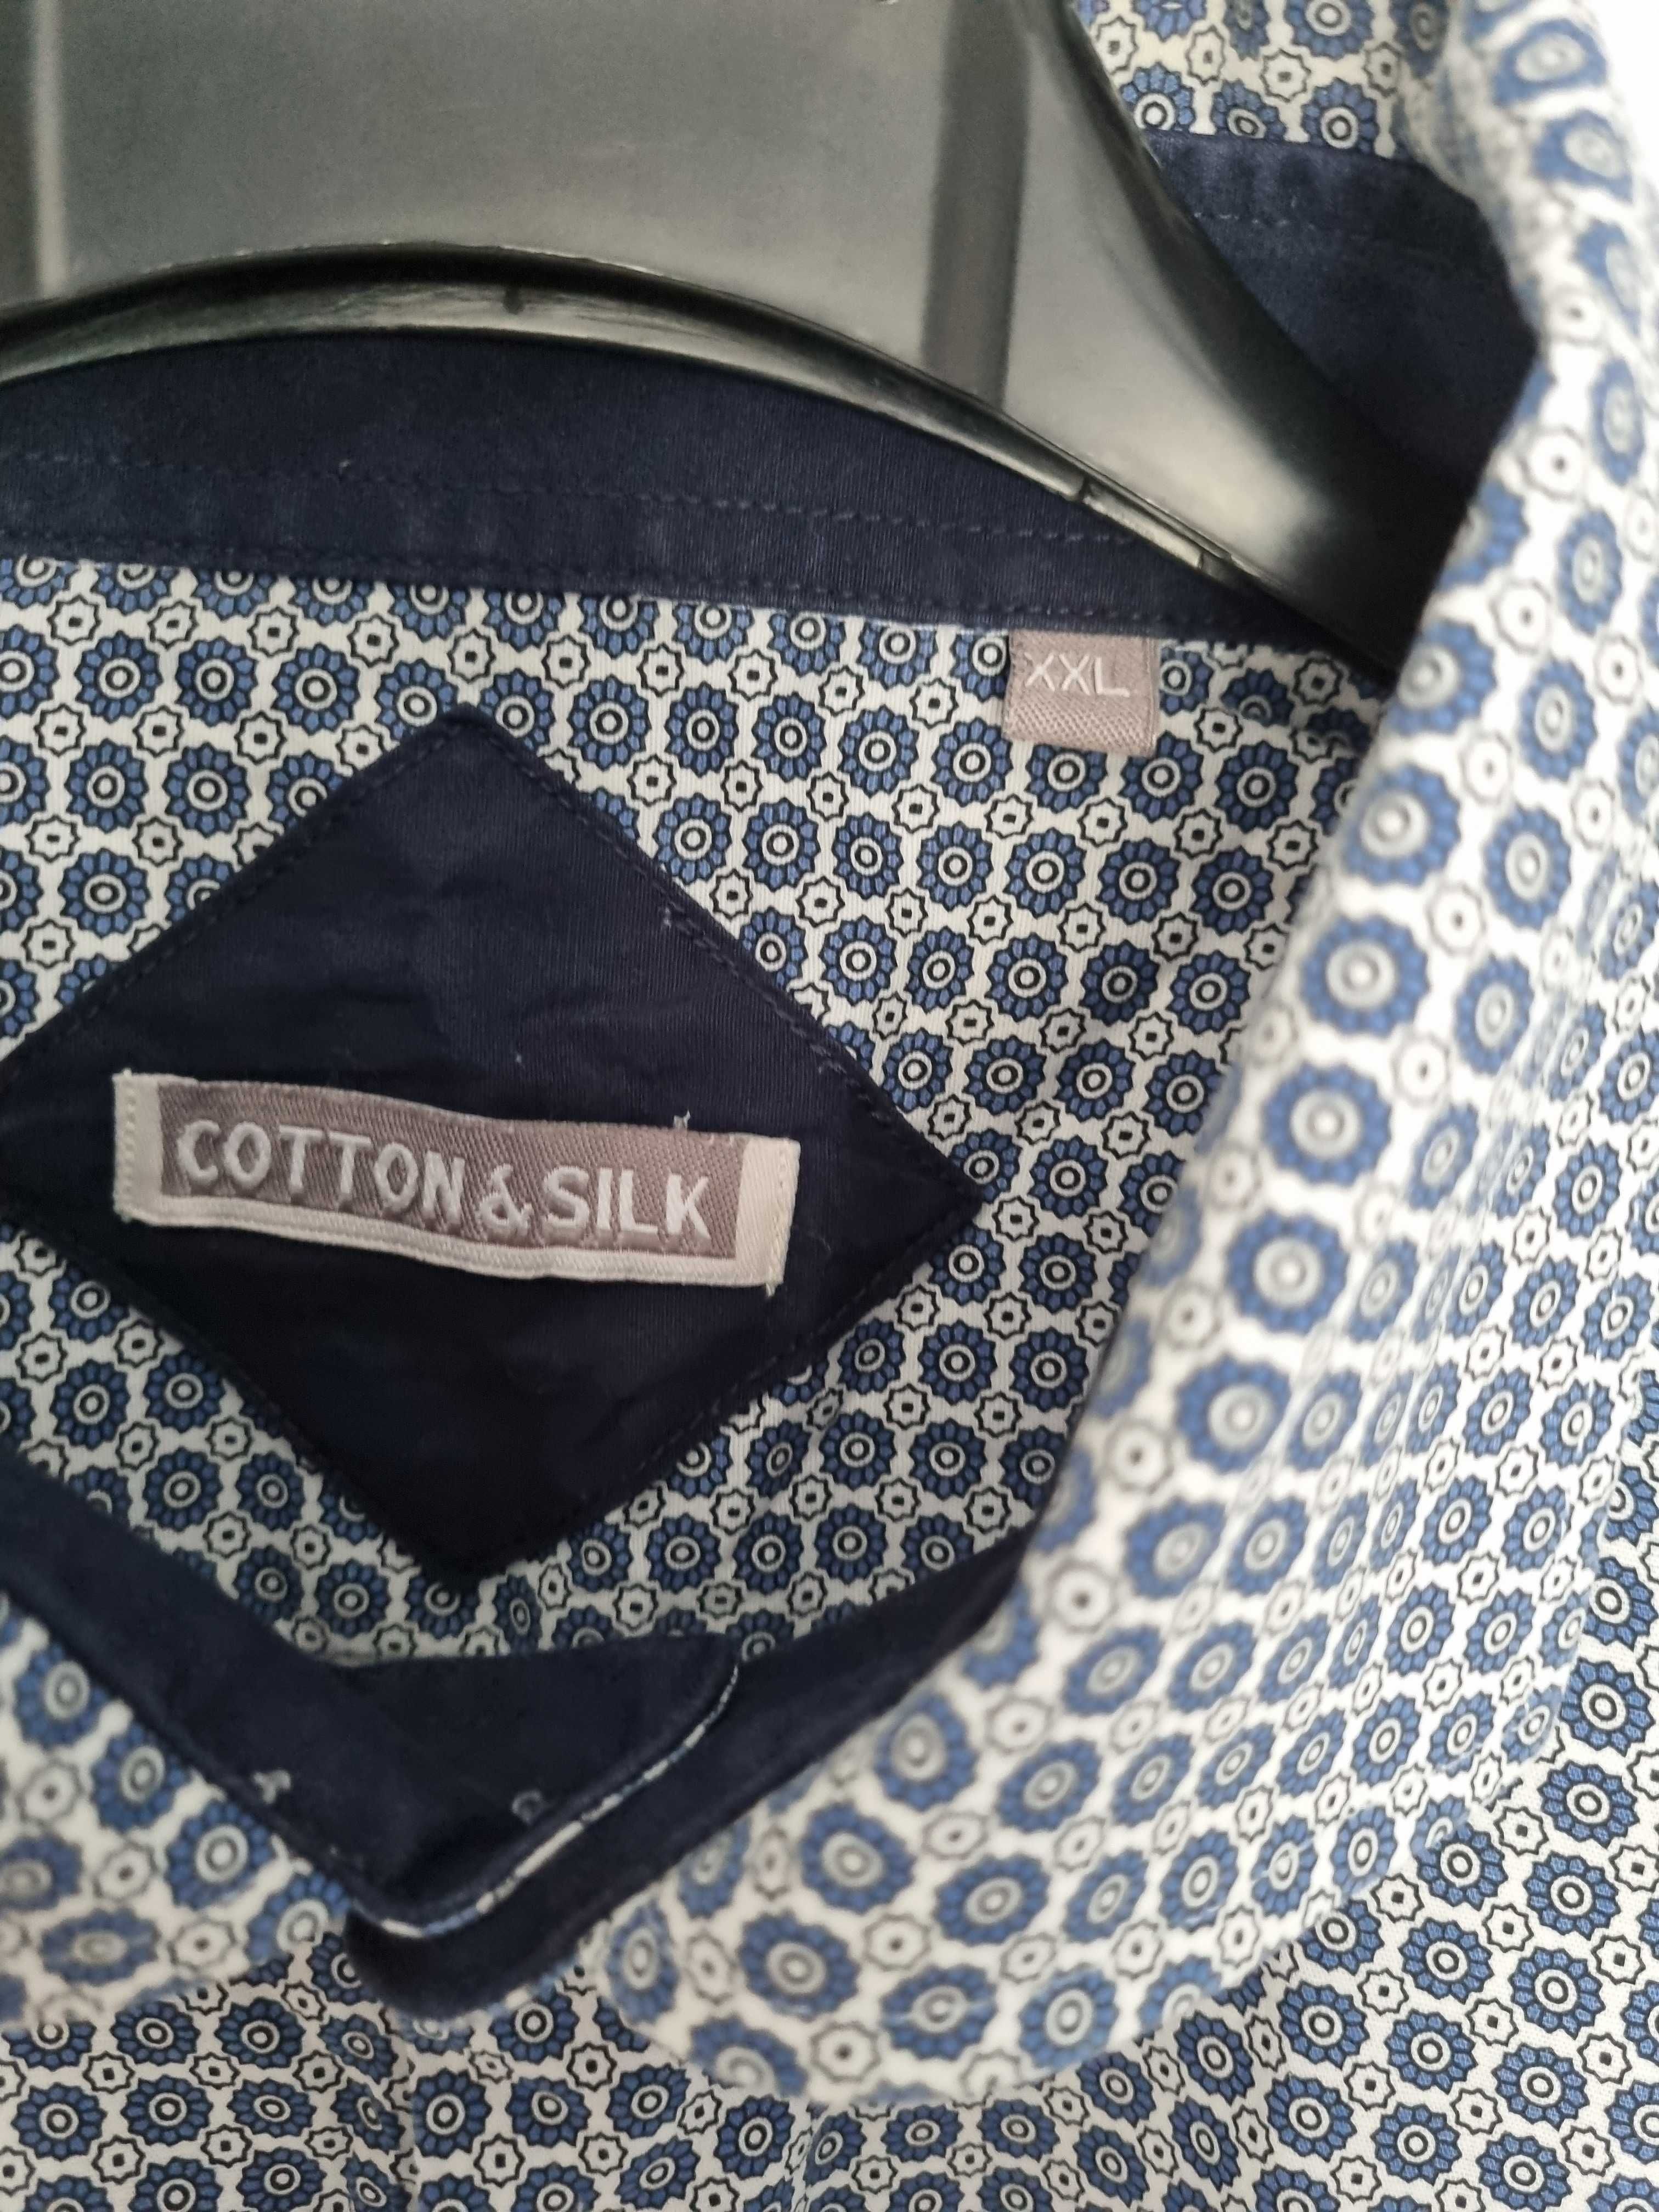 Camasa Cotton&silk [XXL]